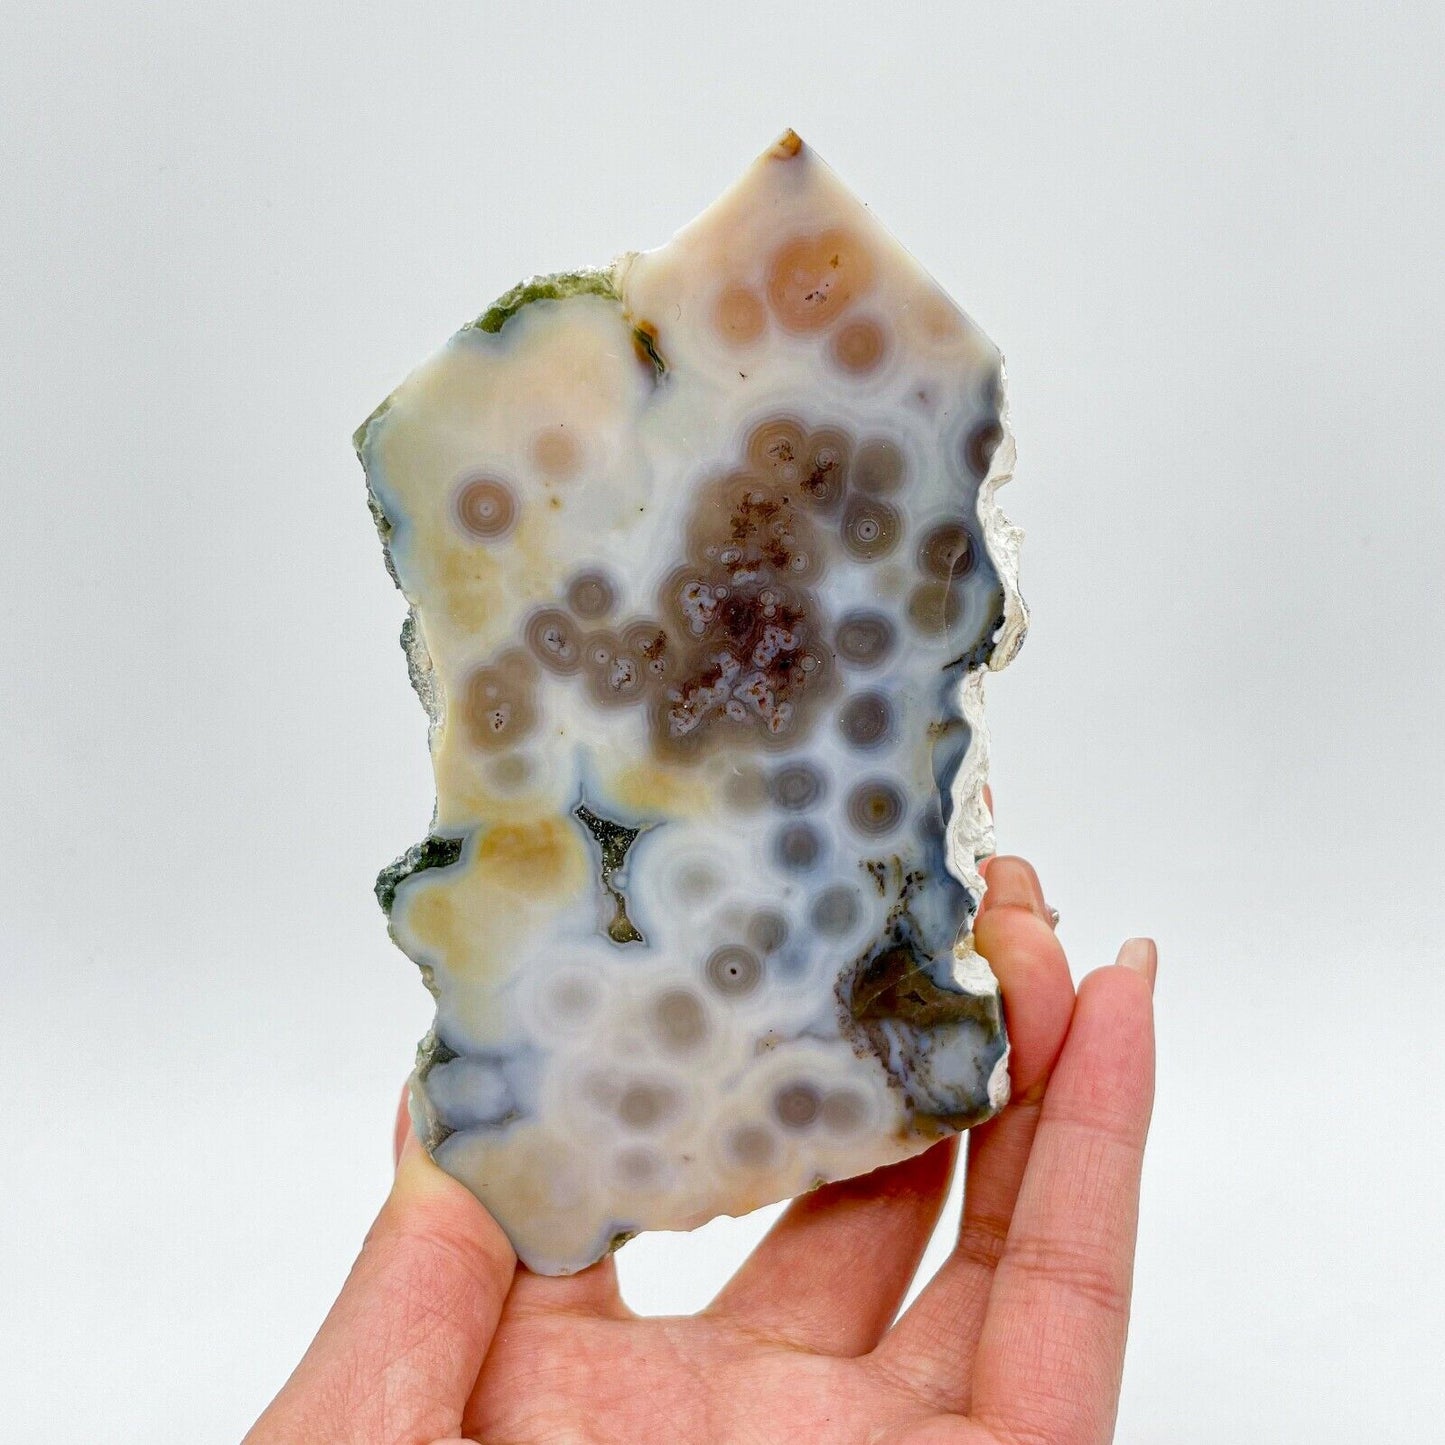 Collection ! Amazing Orbicular Ocean Jasper Agate Druzy Slab Reiki Stone Gift 08